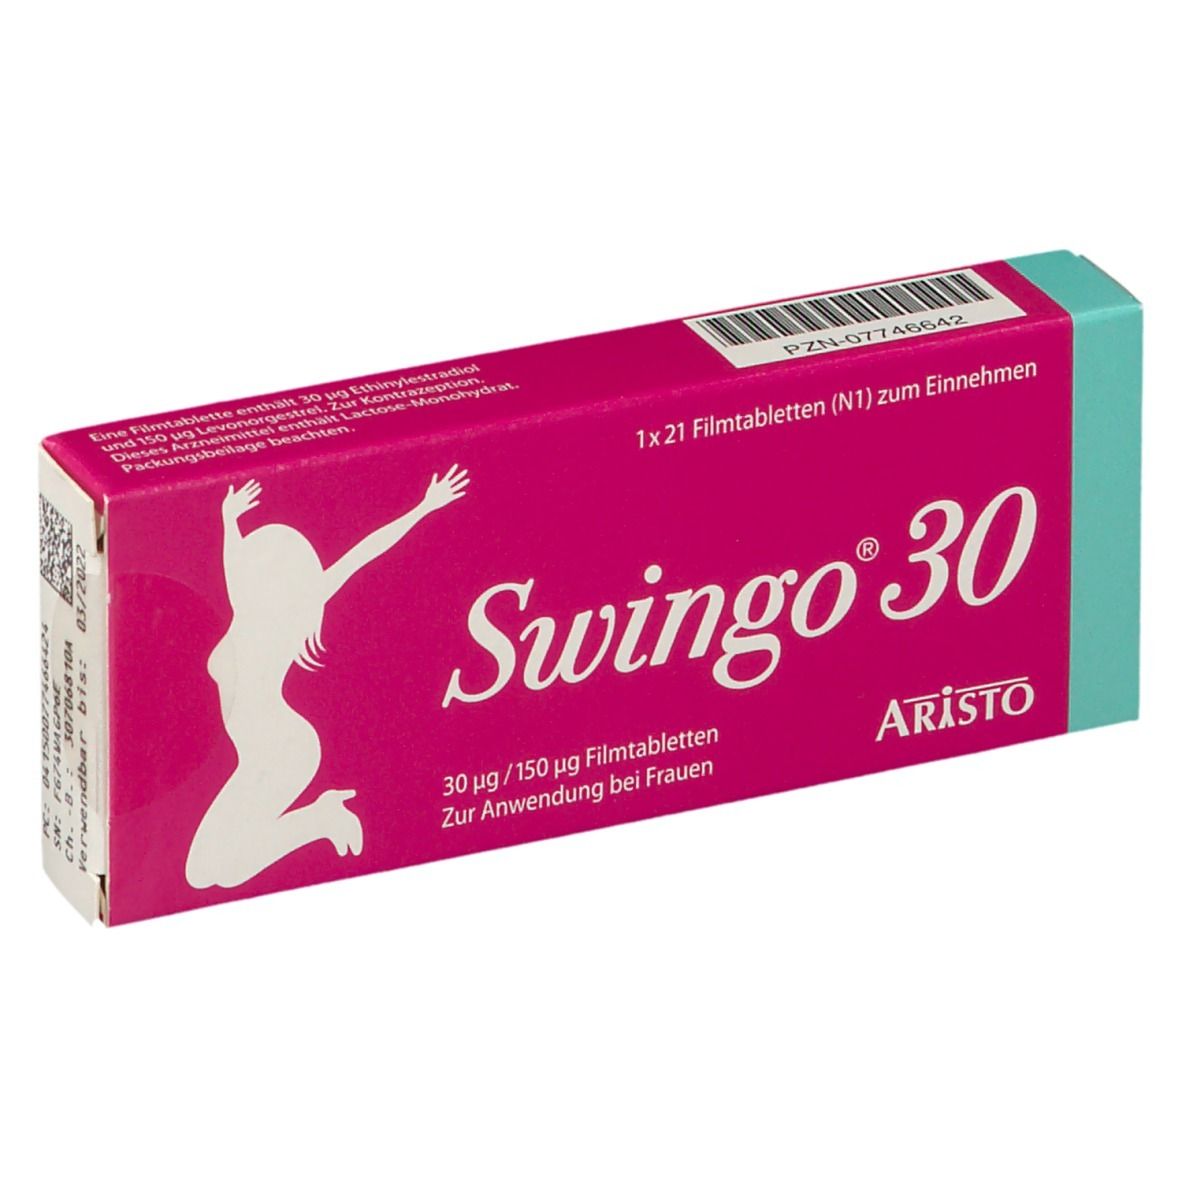 Pille swingo 30 gewichtszunahme